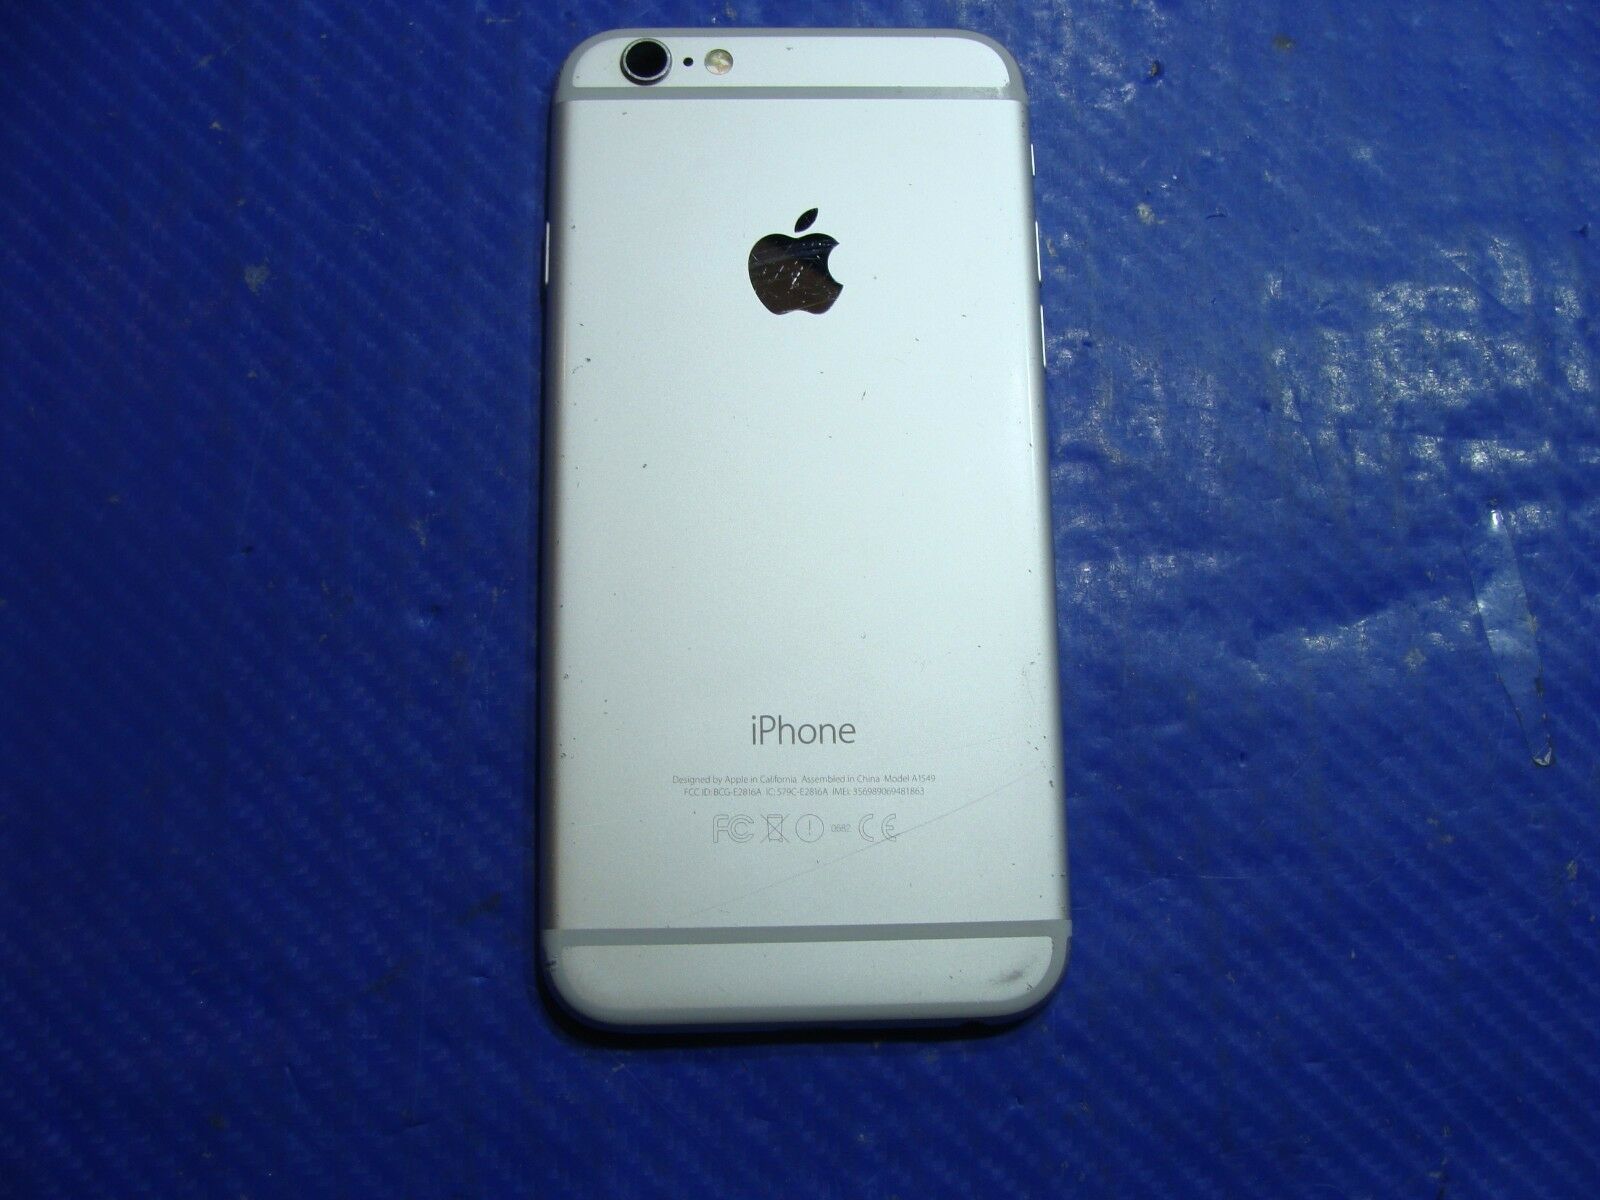 Apple iPhone 6 A1549 4.7